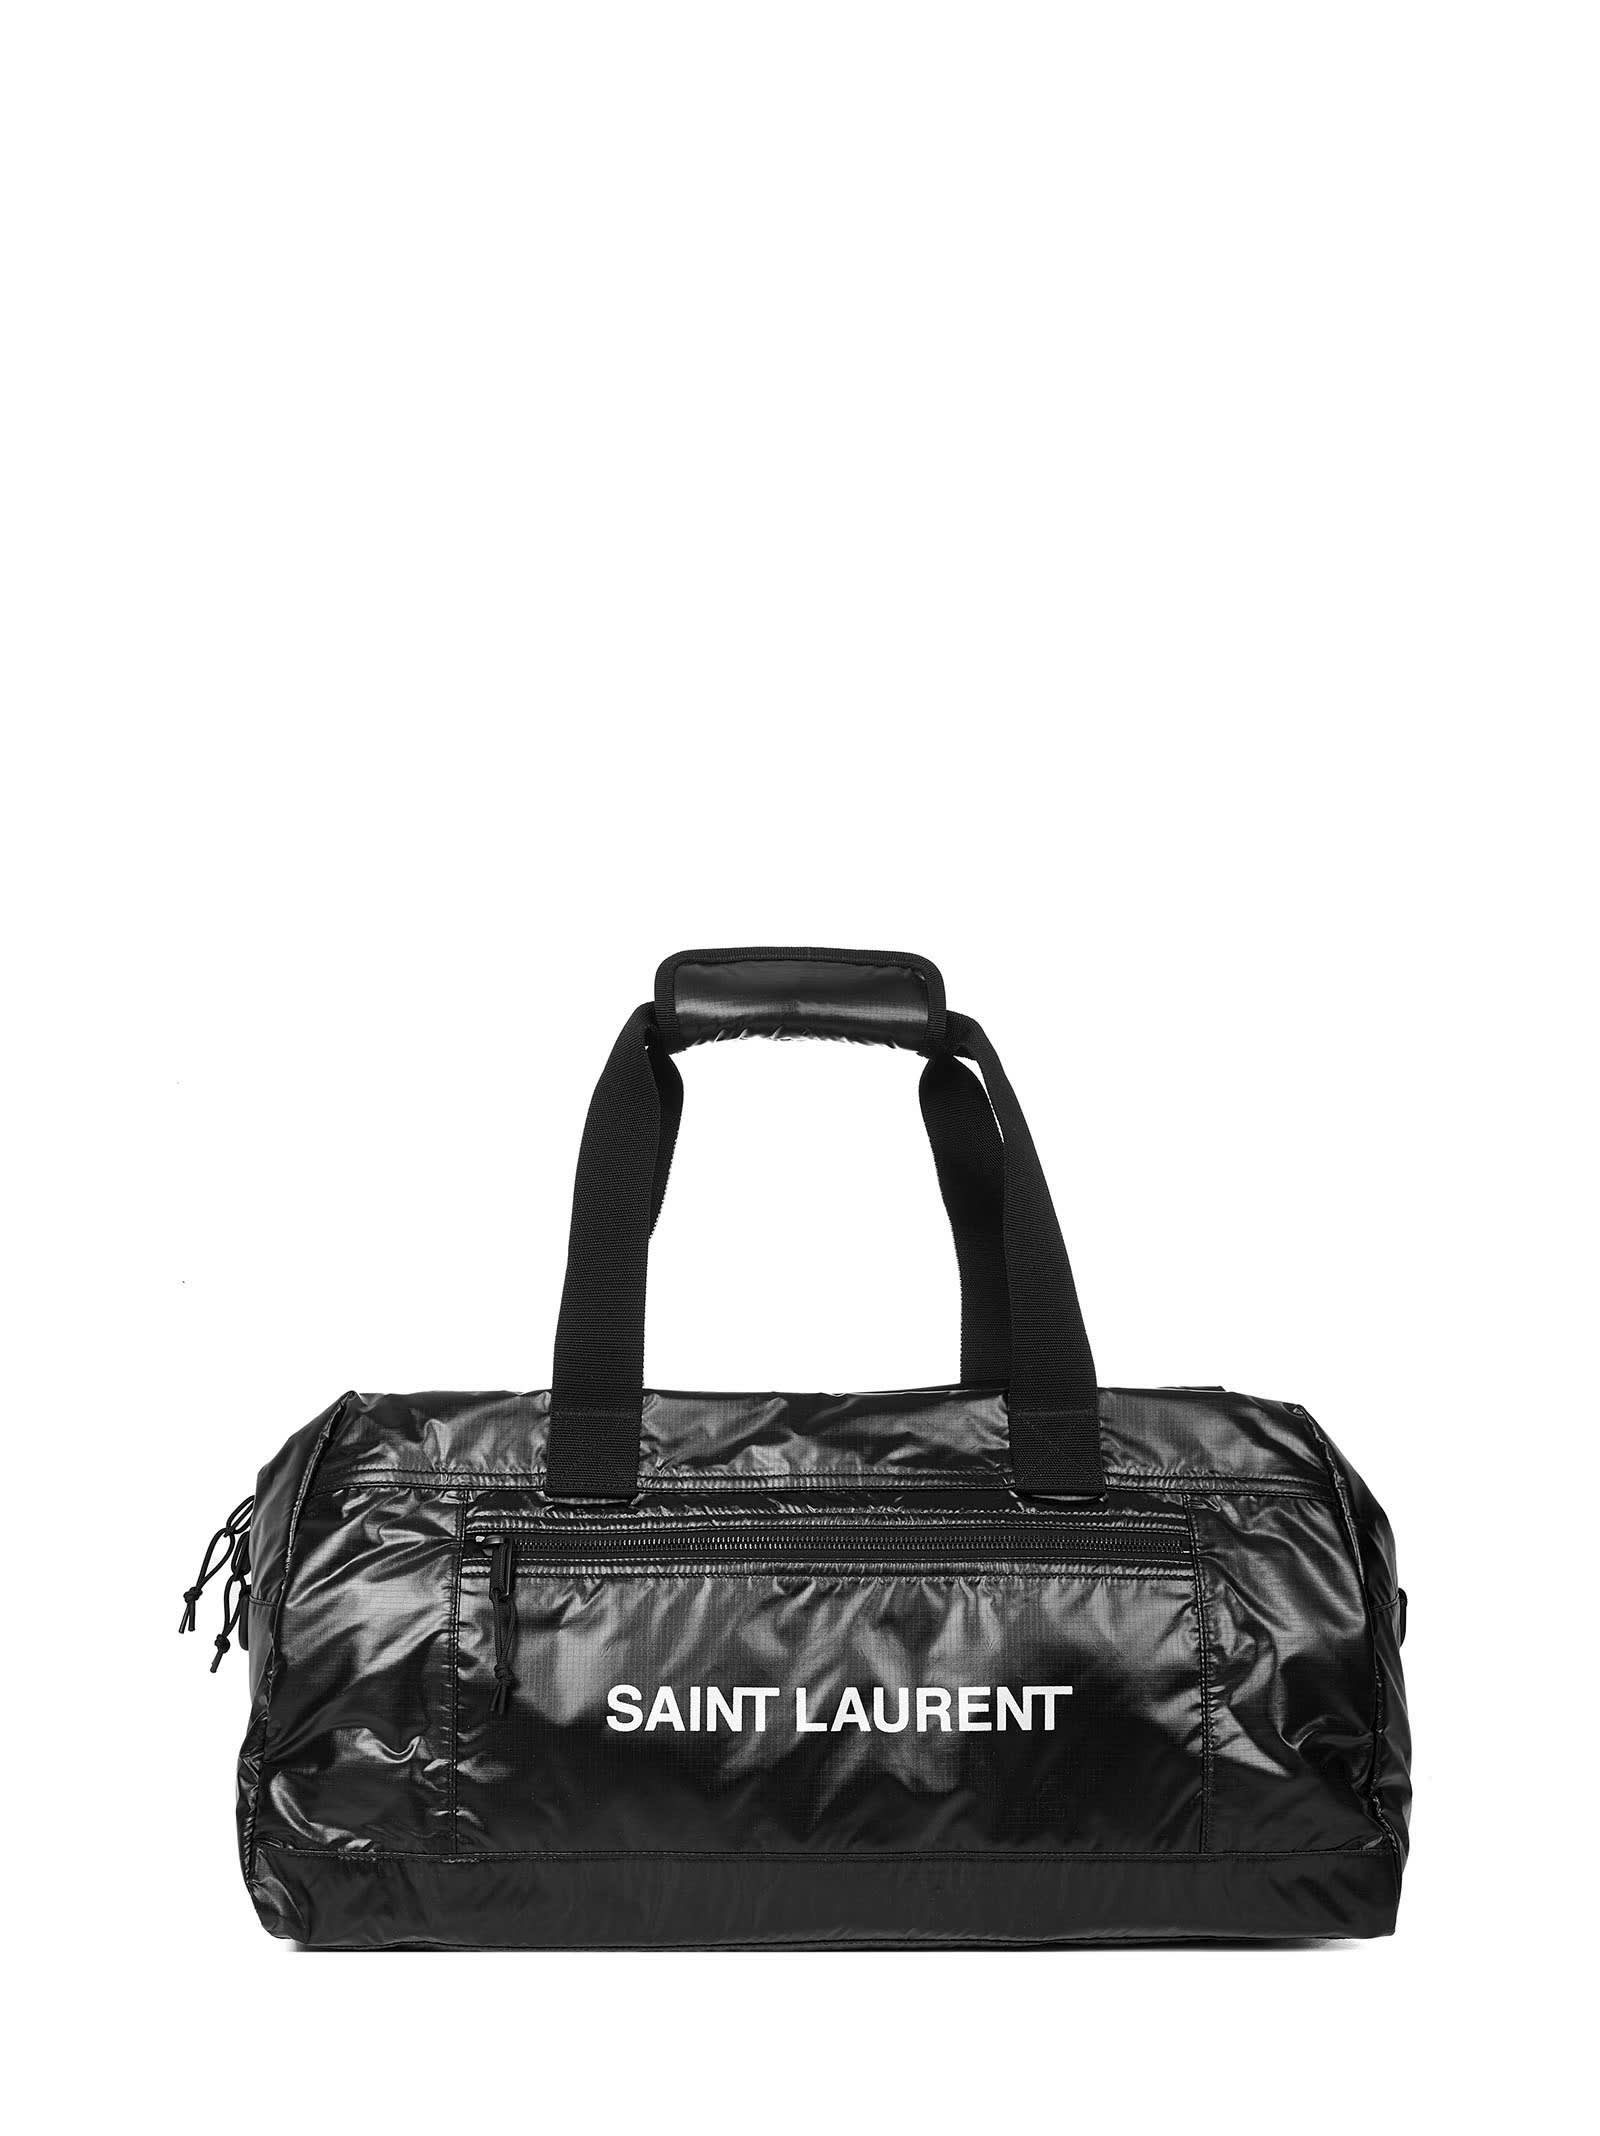 Saint Laurent Nuxx Handbag